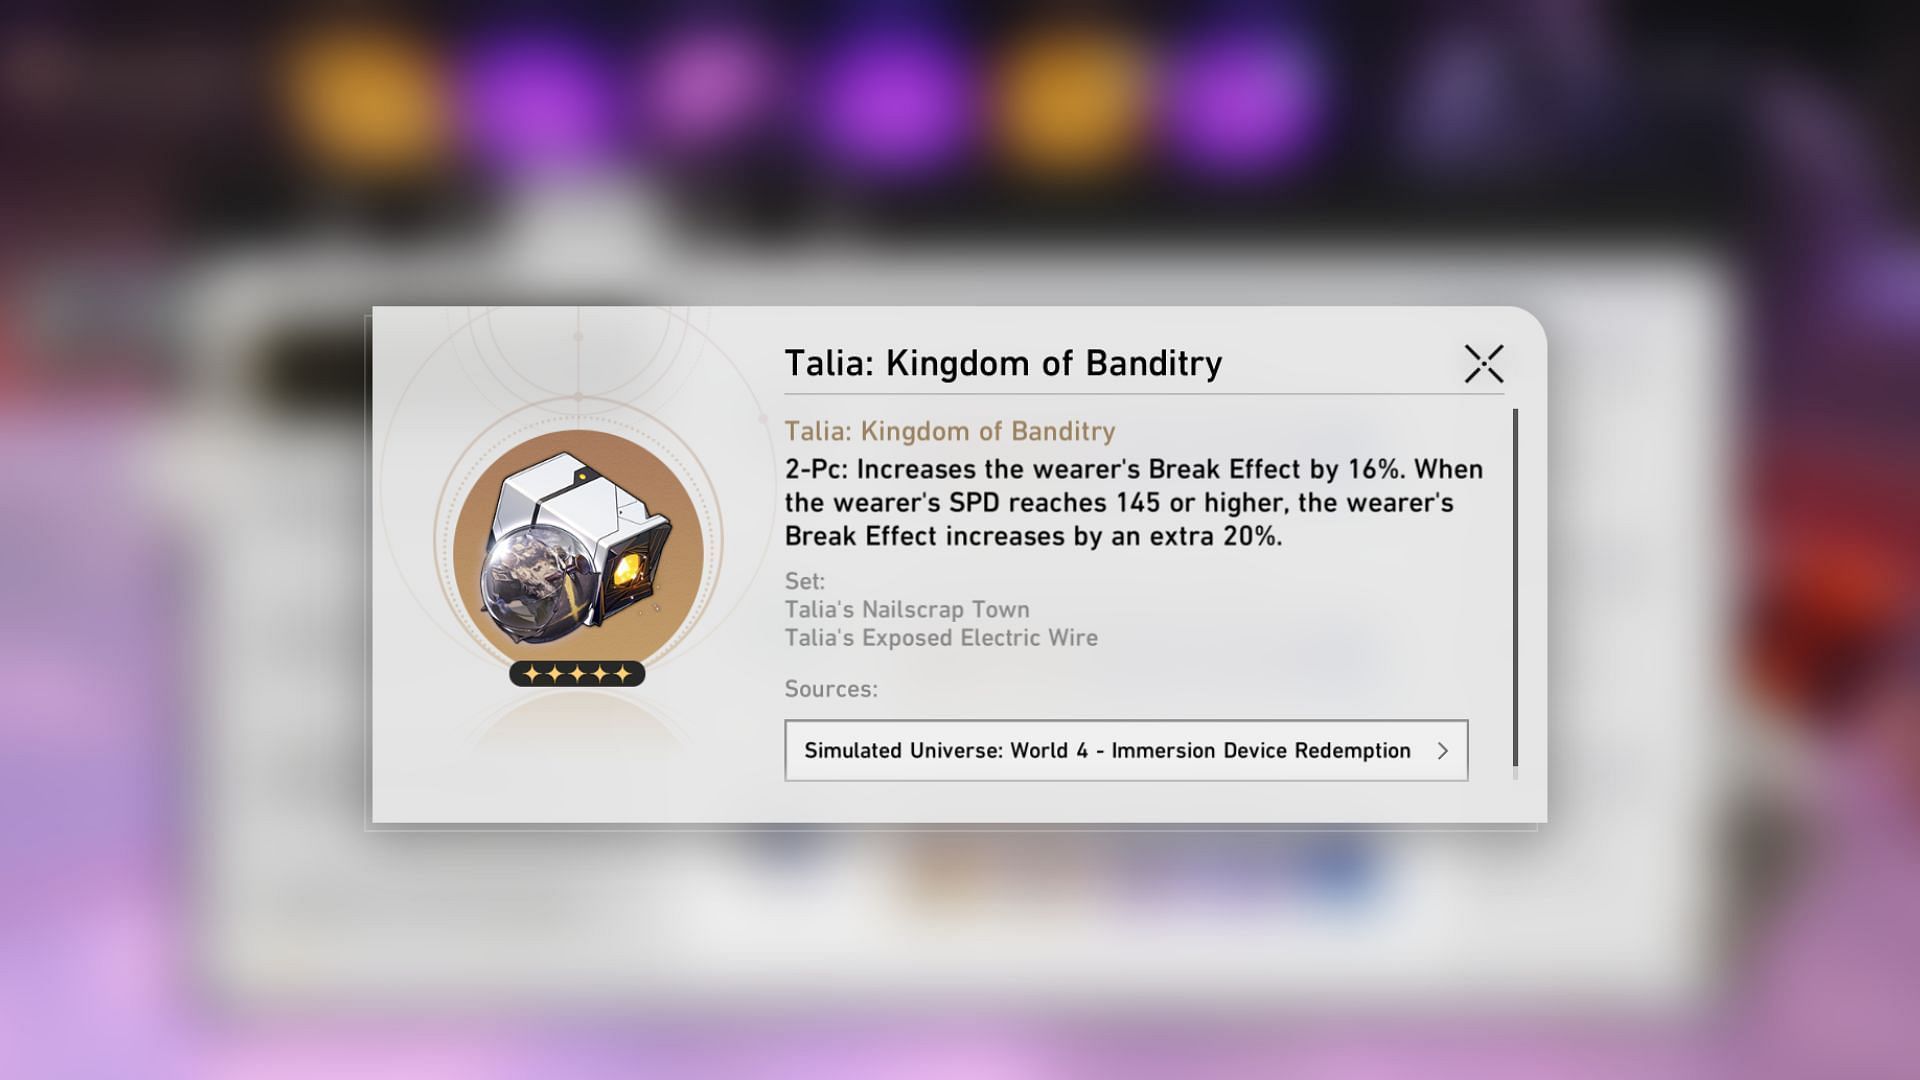 Talia: Kingdom of Banditry Planar Ornament set (Image via HoYoverse)